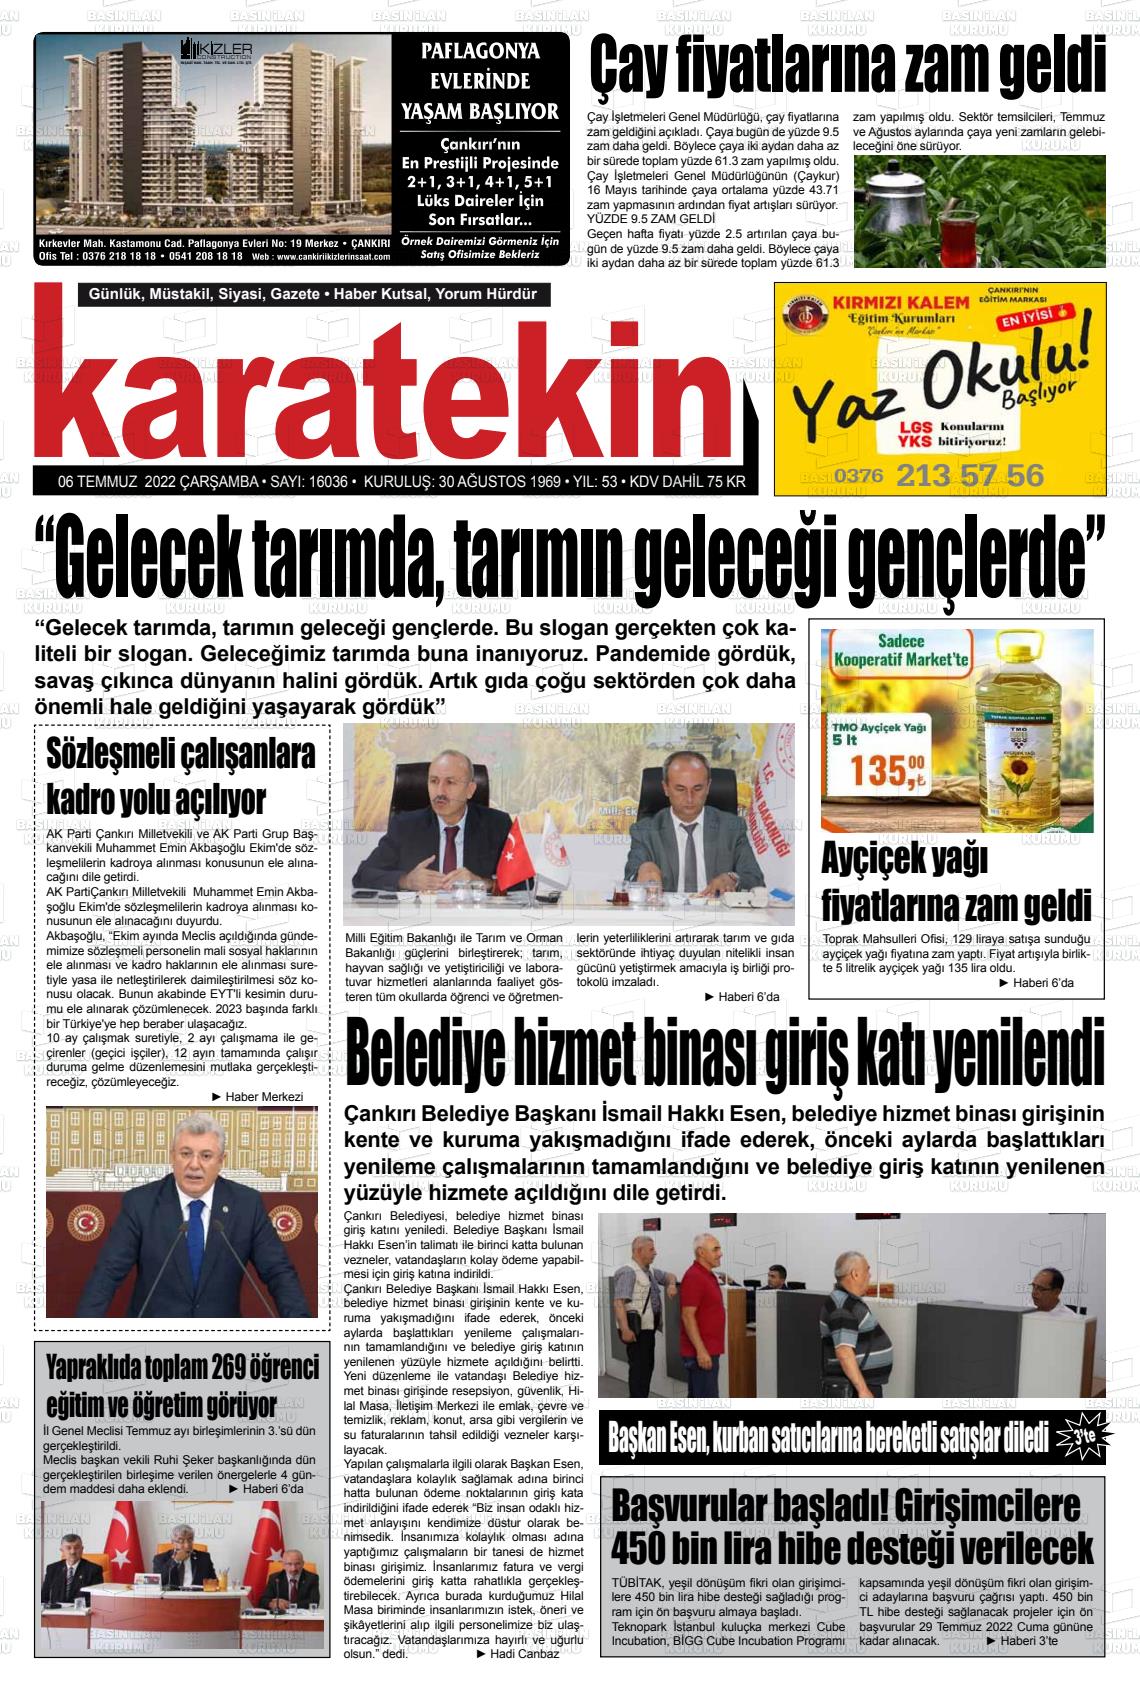 06 Temmuz 2022 Karatekin Gazete Manşeti